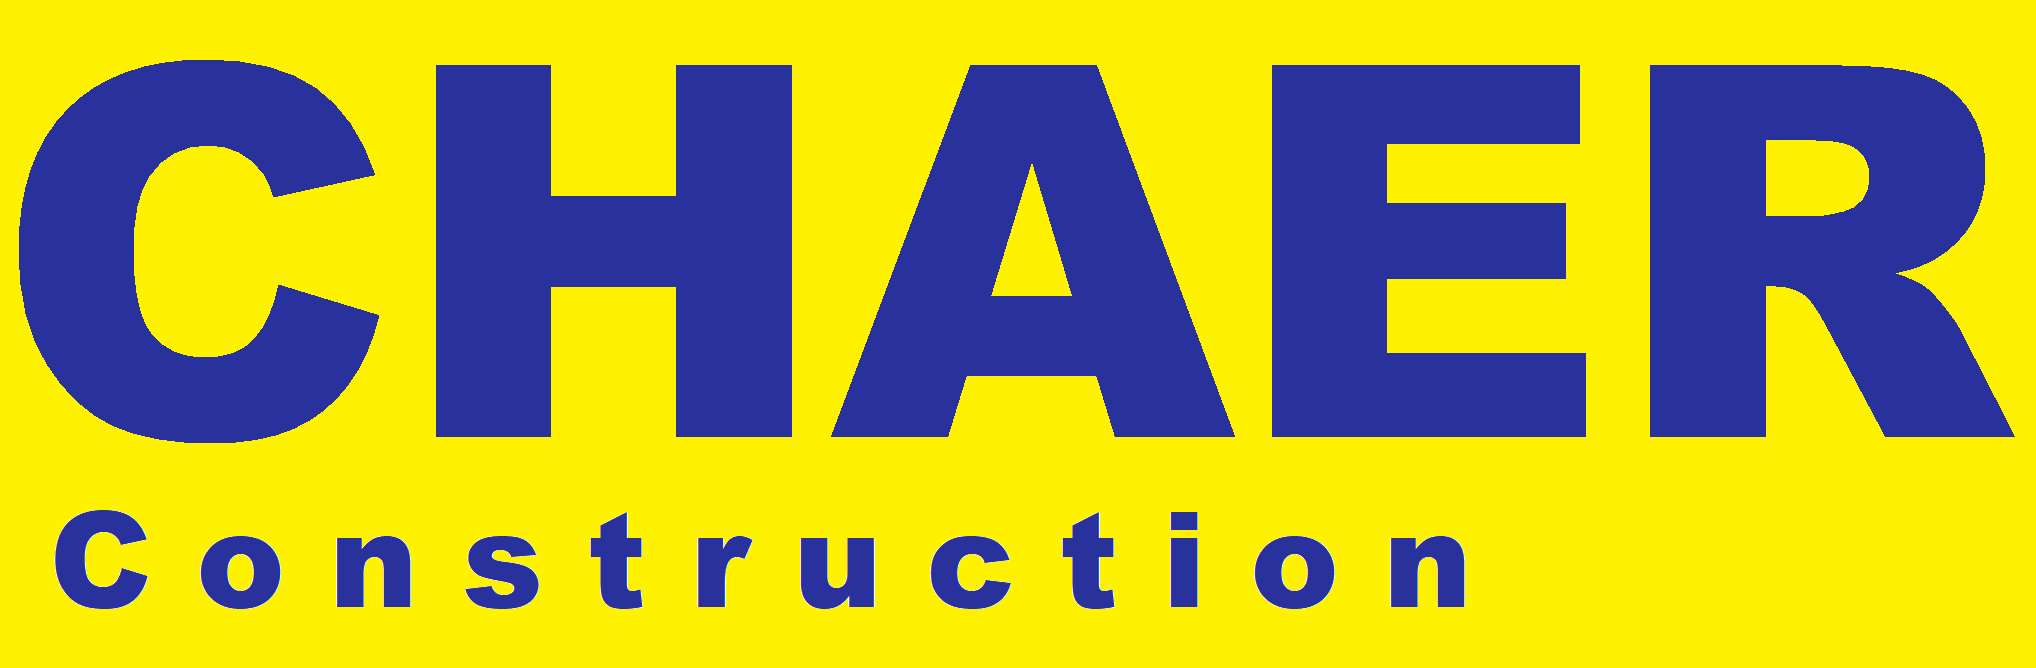 Chaer Construction, LLC Logo